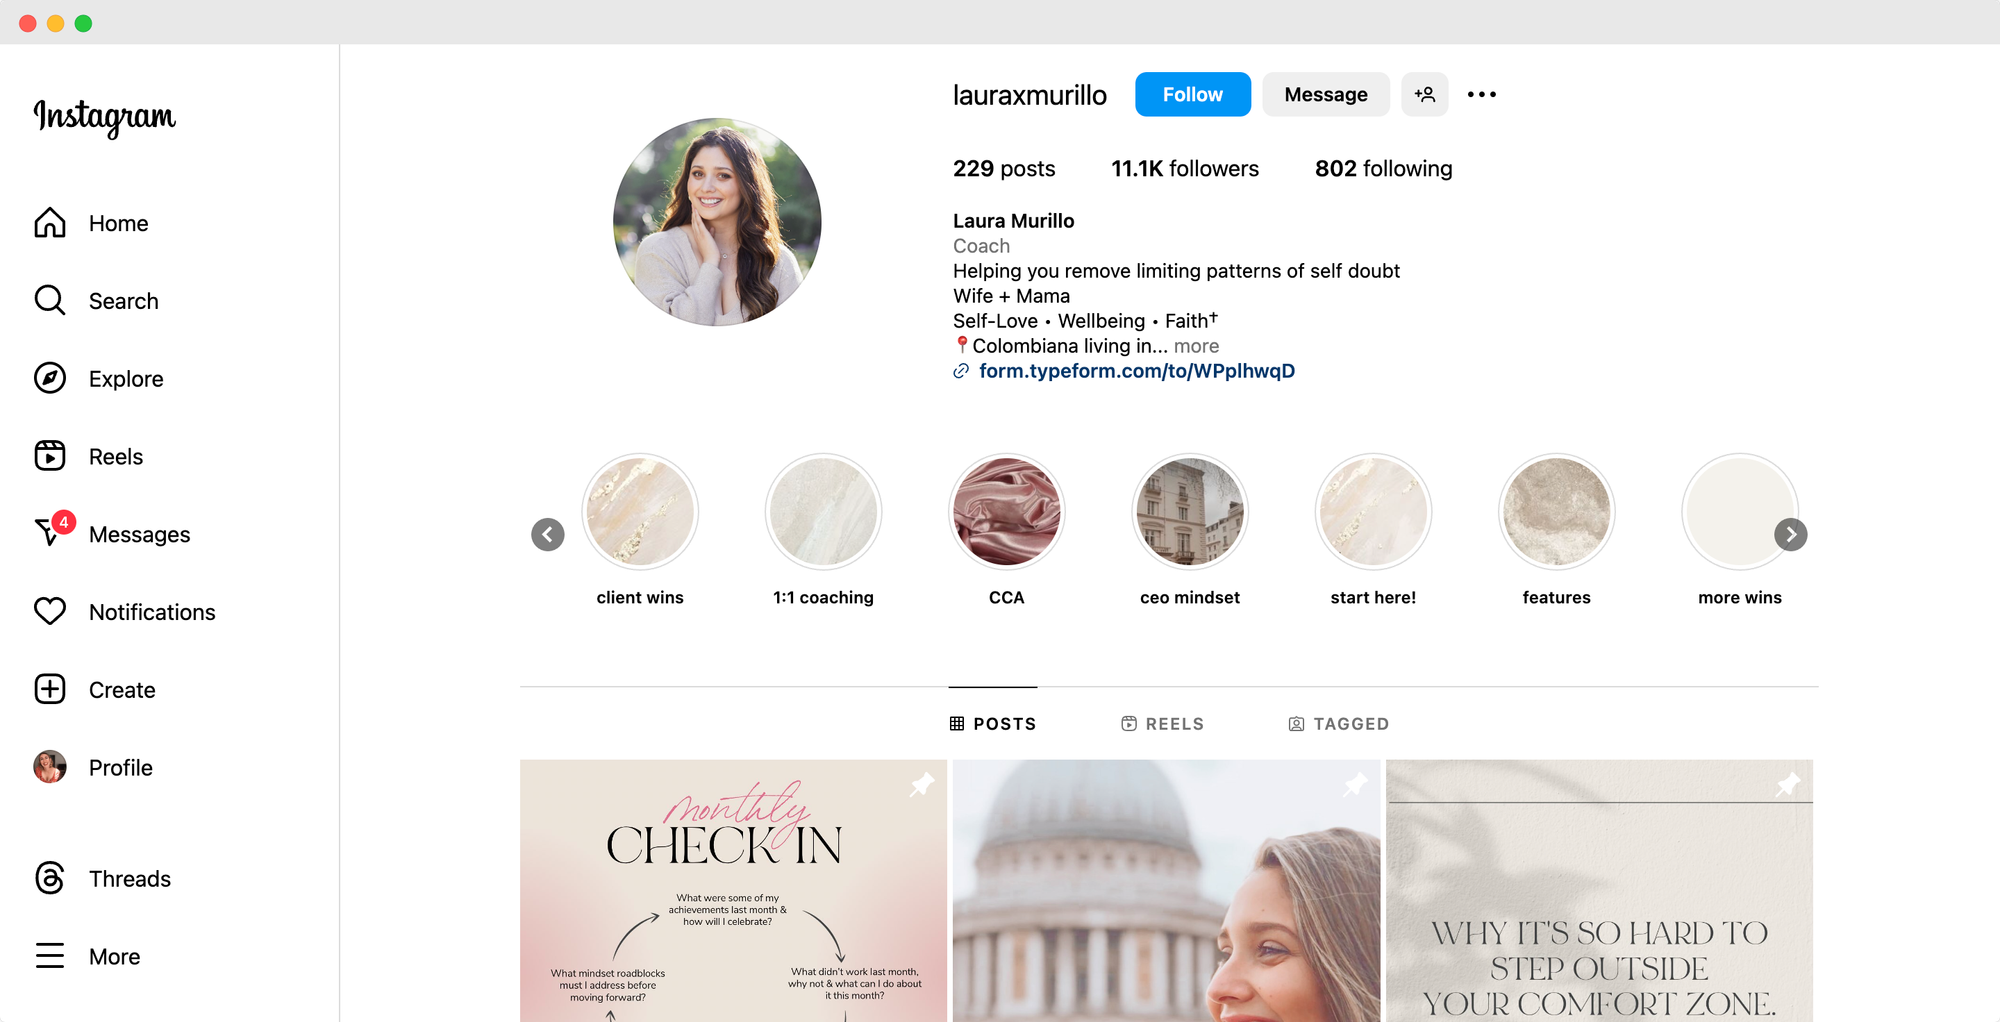 Laura Murillo's Instagram profile